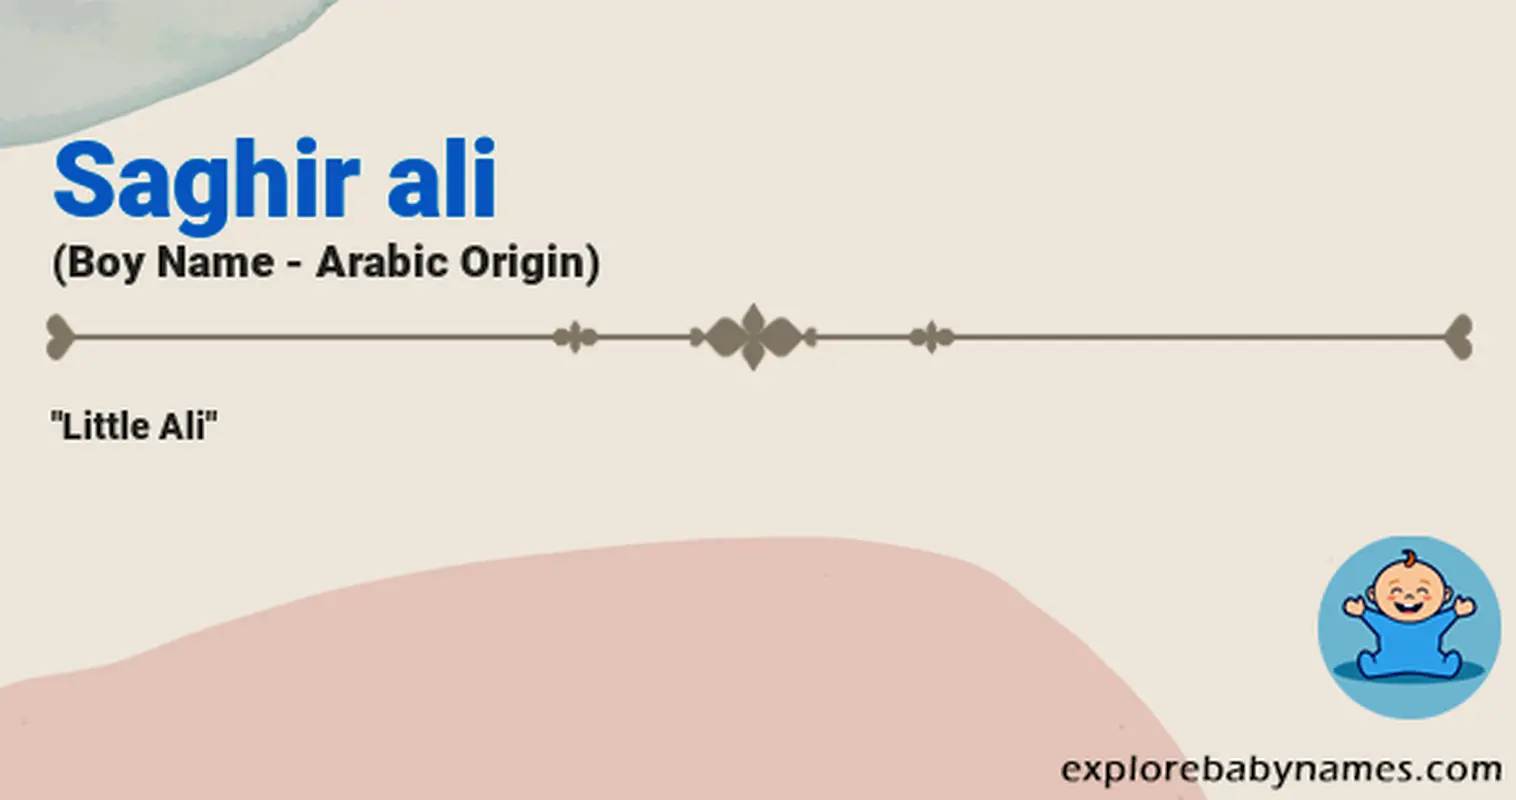 Meaning of Saghir ali